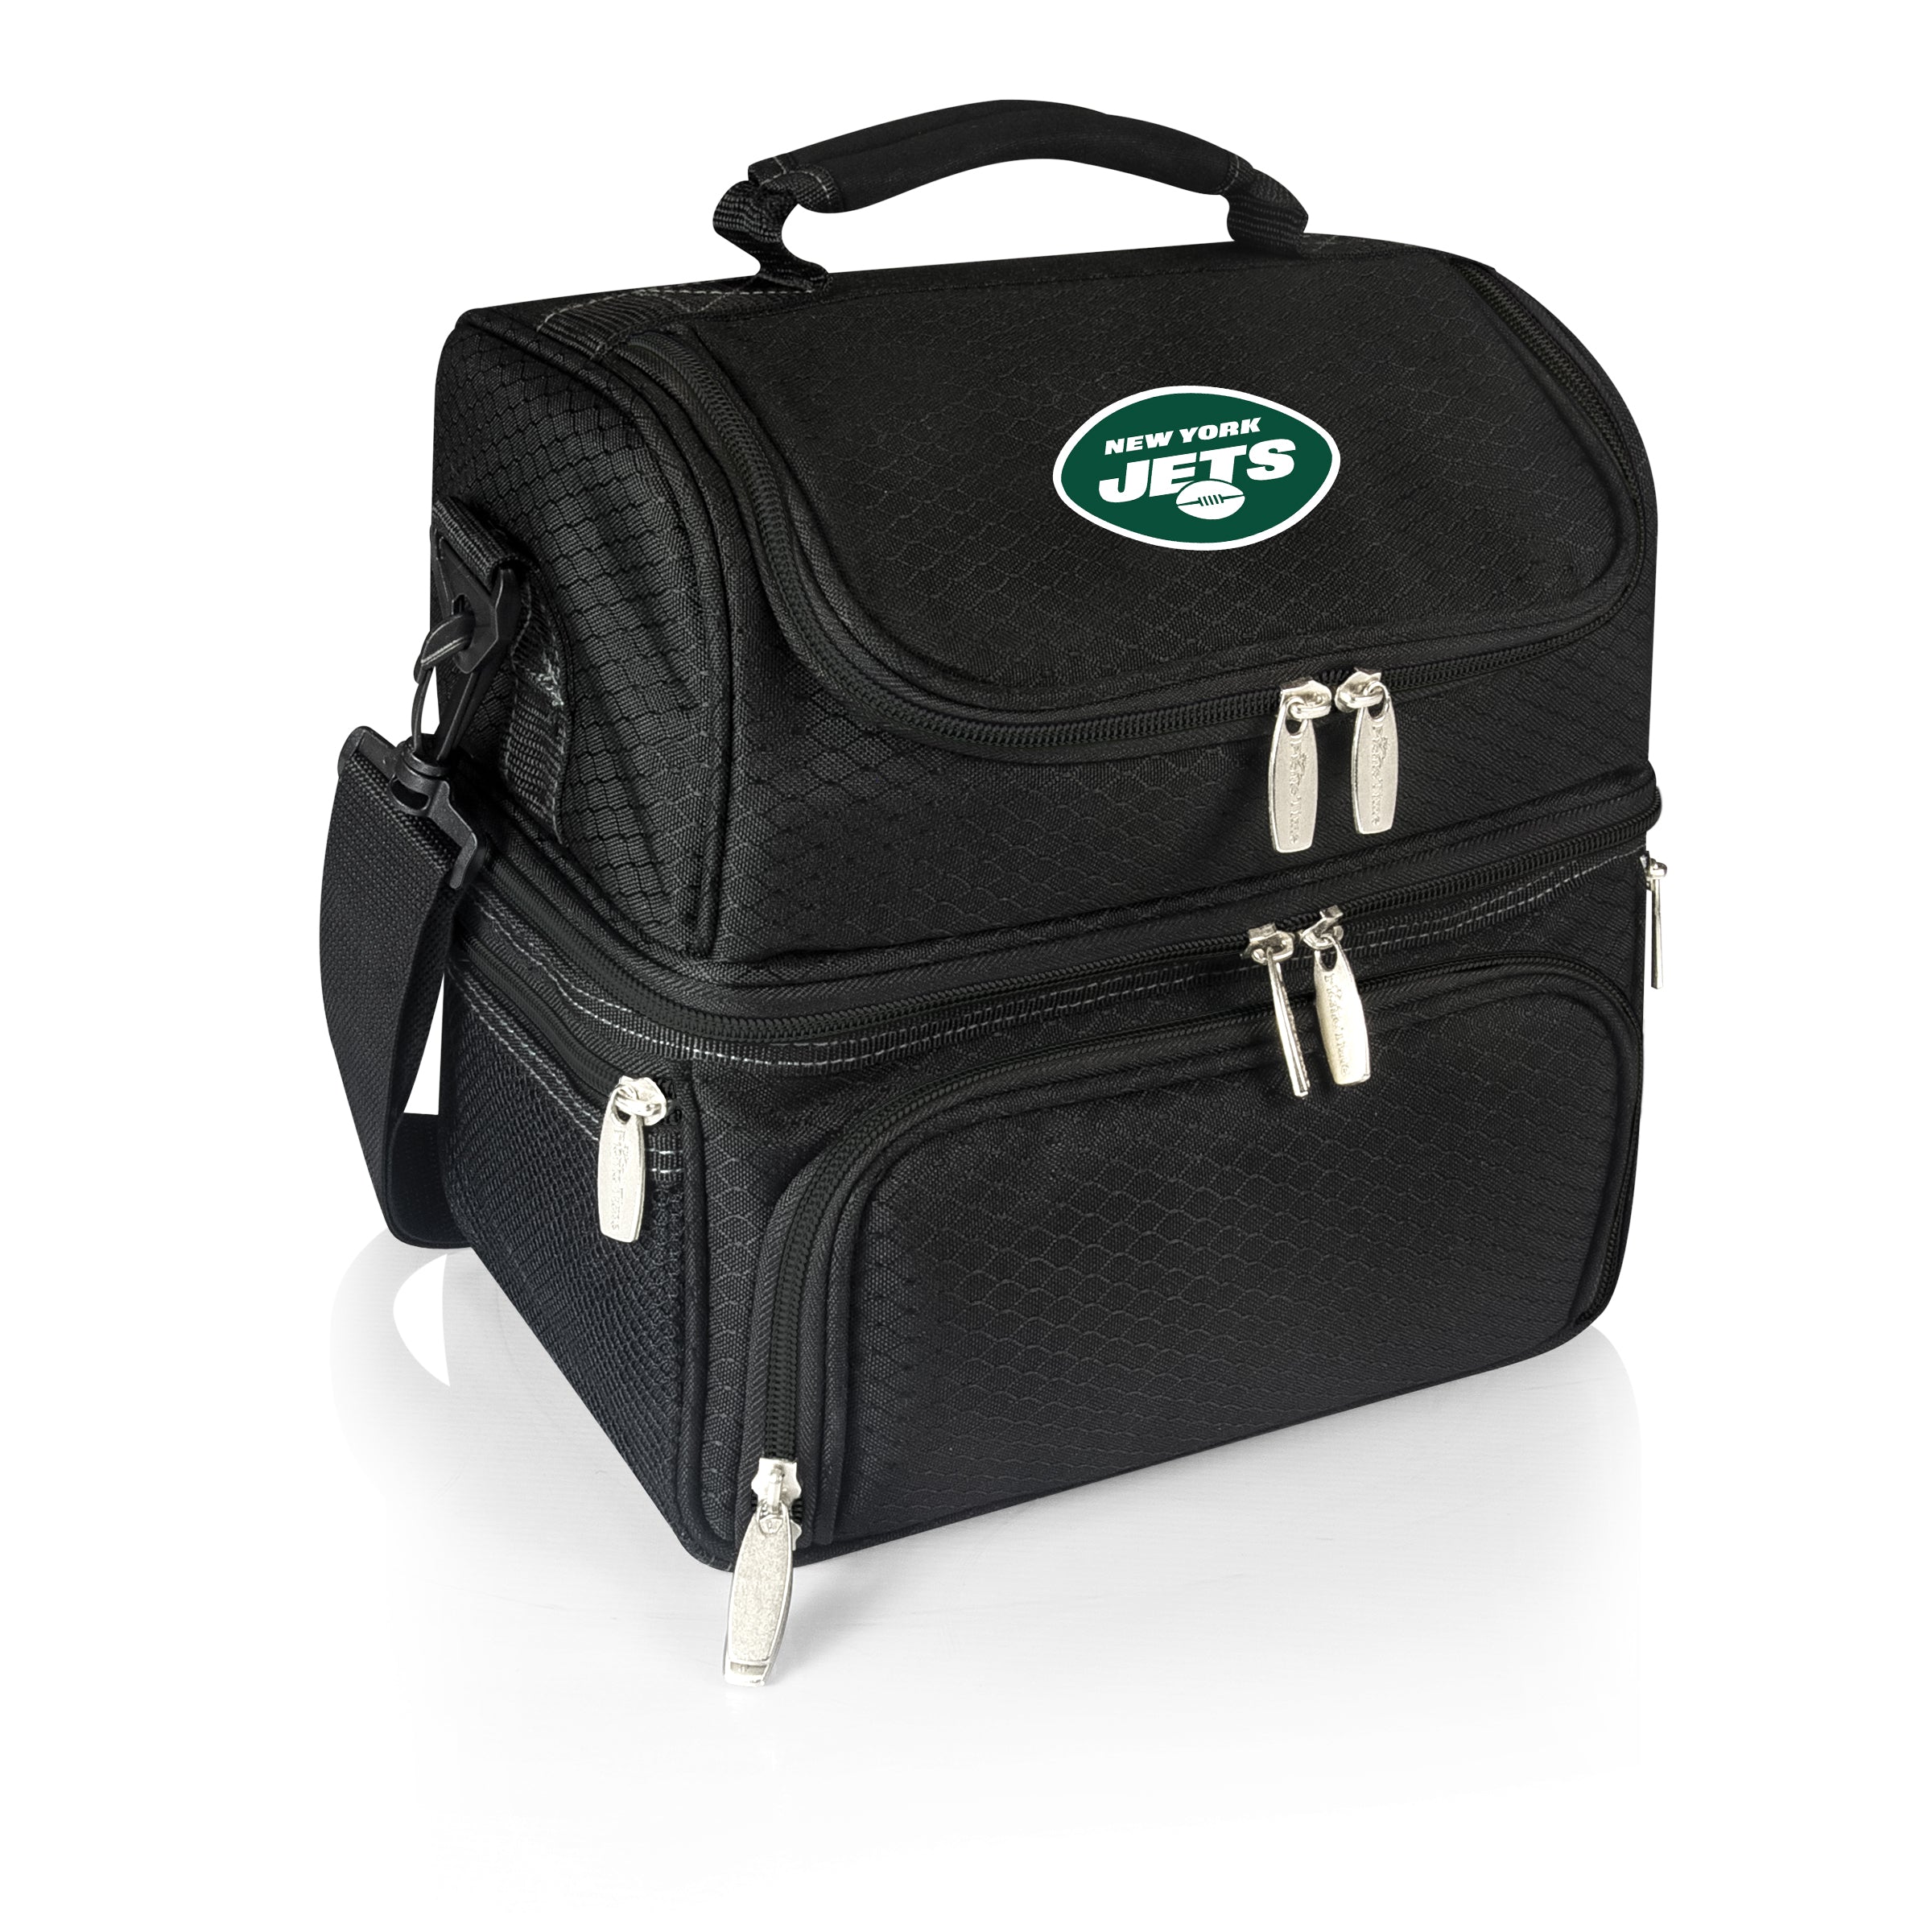 New York Jets - Pranzo Lunch Cooler Bag